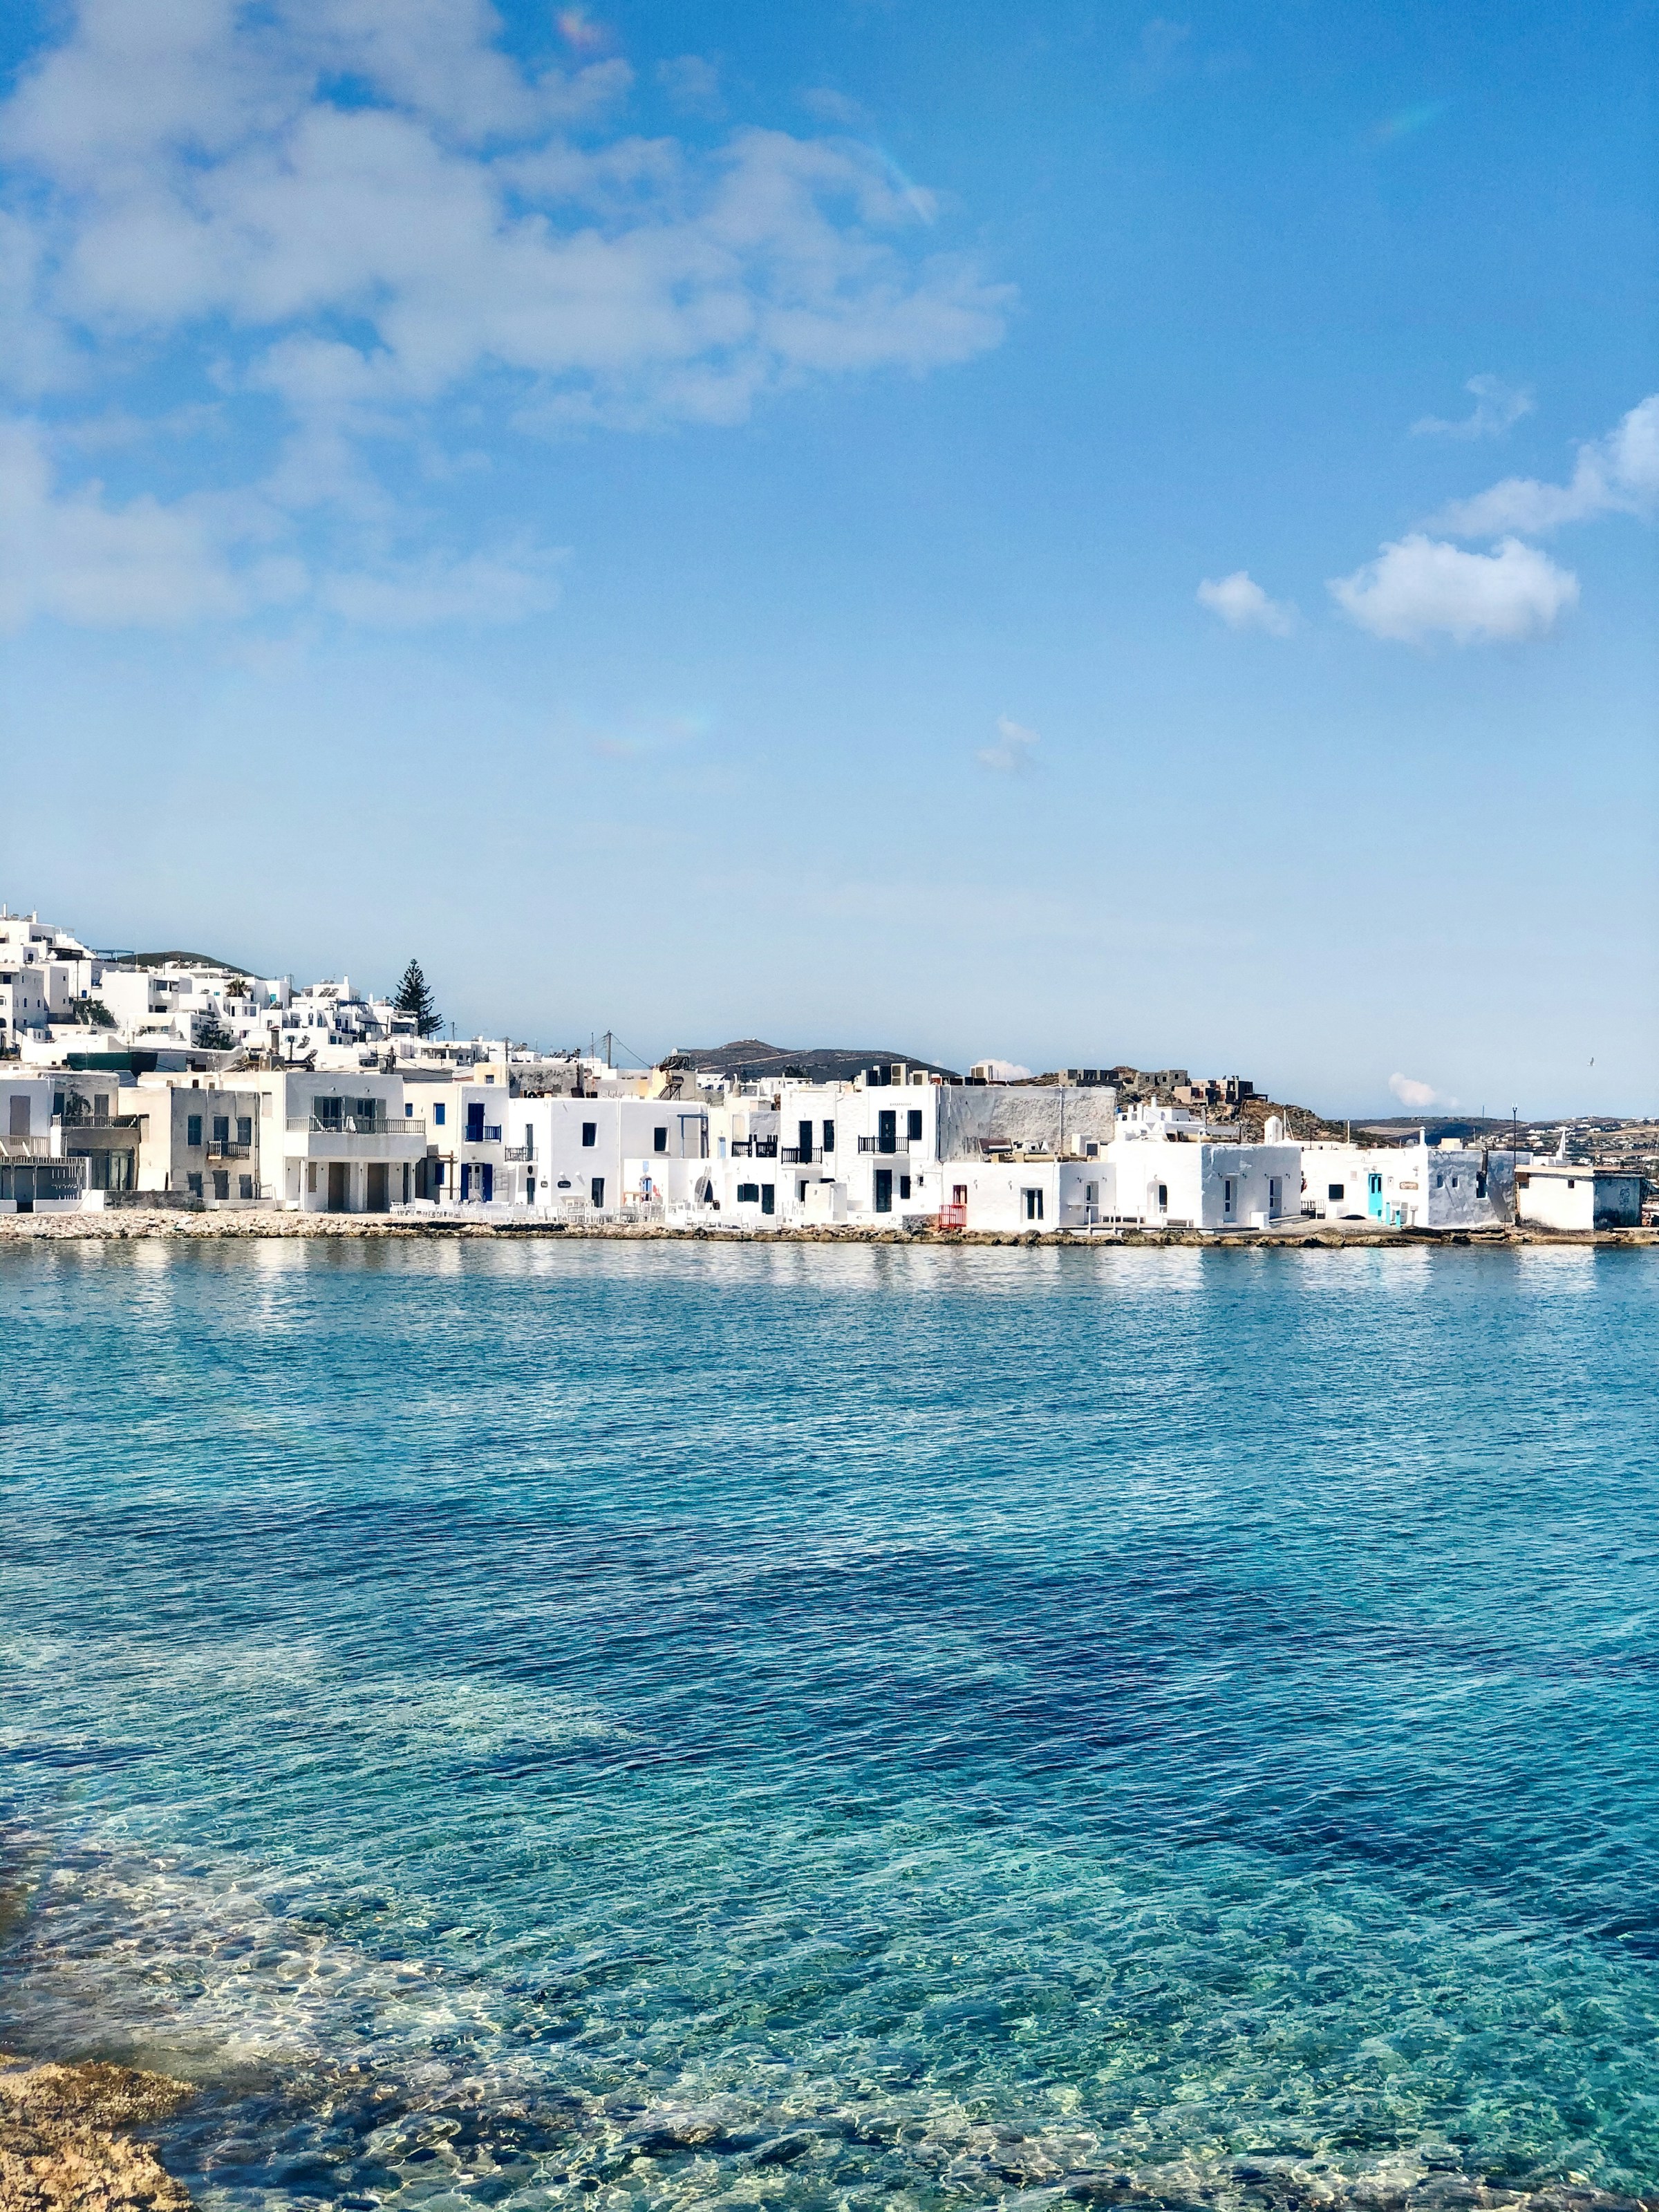 blue sea meets small Greek village on the island of Paros